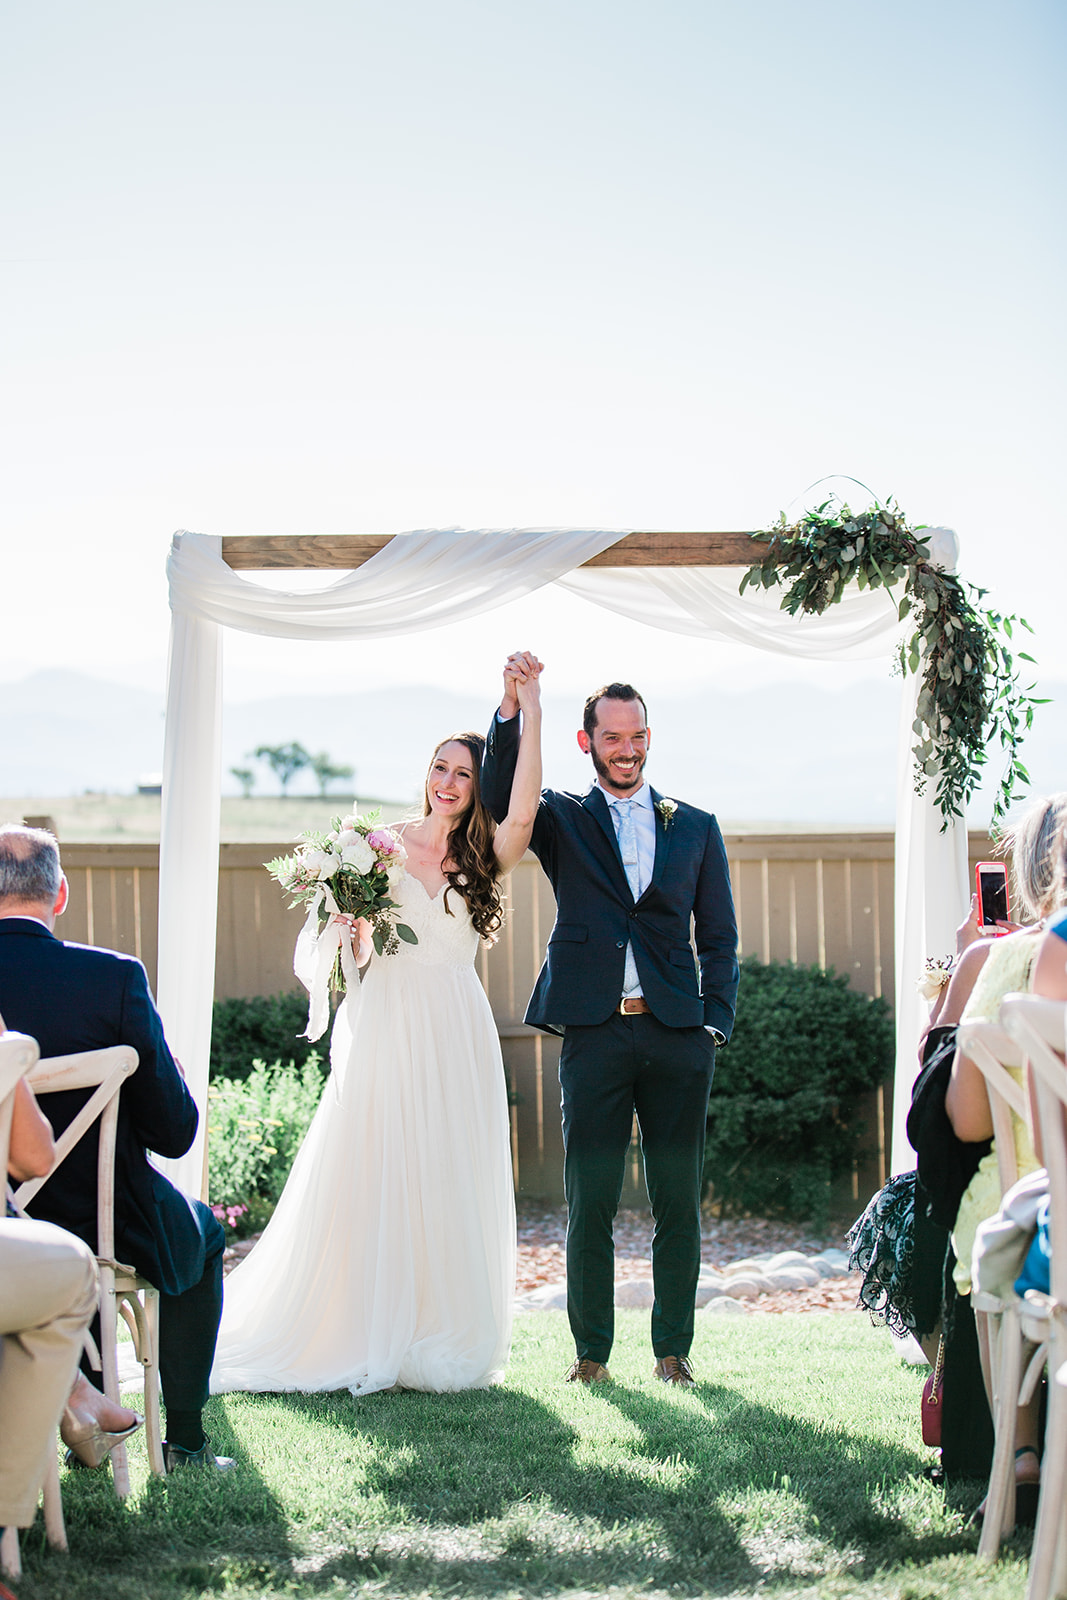 bride and groom celebrate getting married at backyard wedding